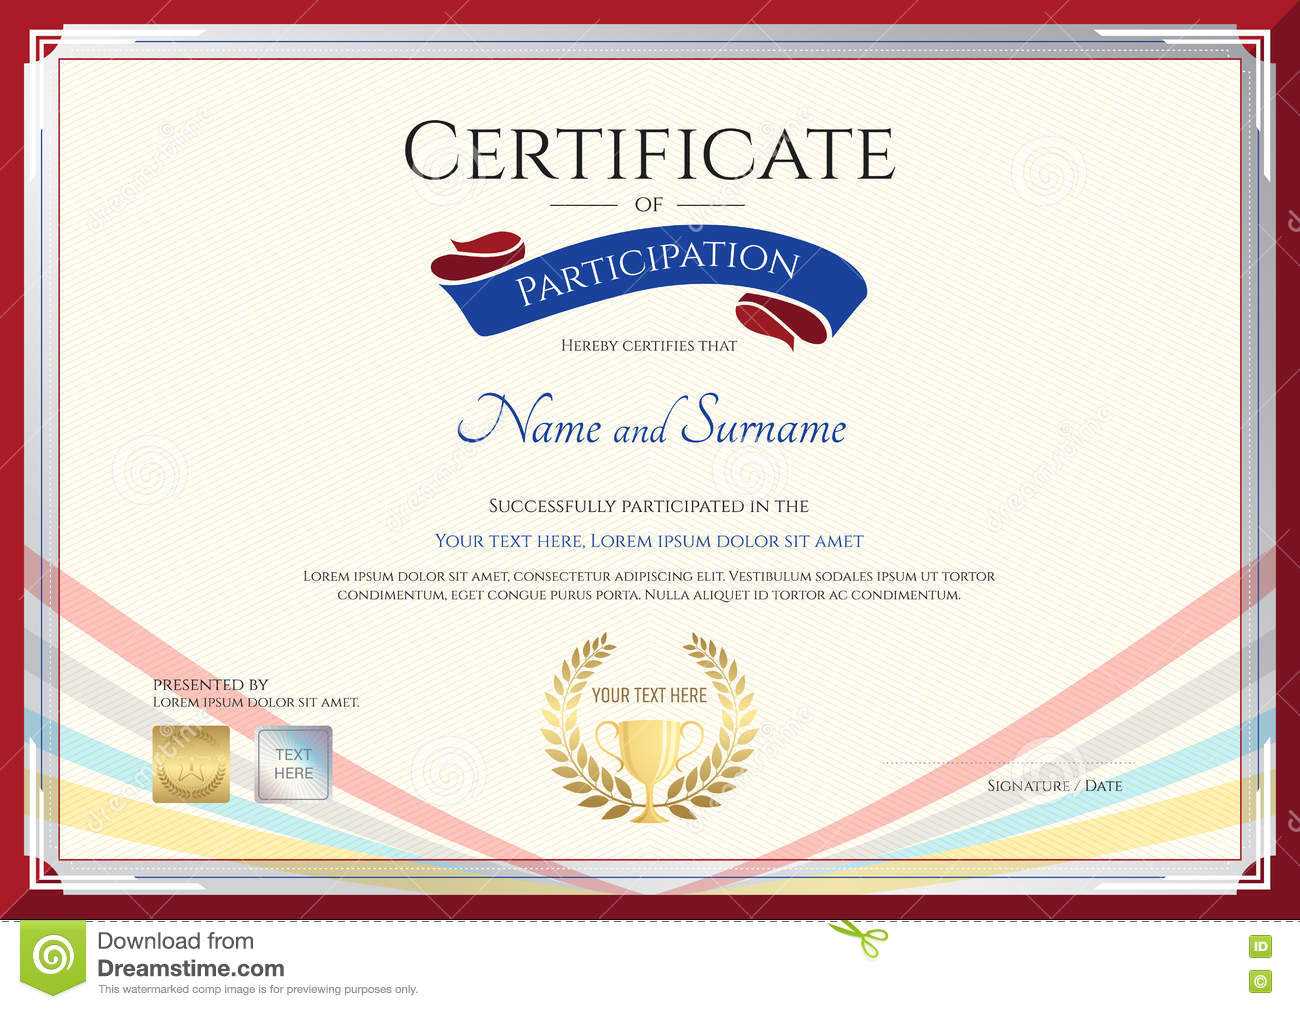 Certificate Template For Achievement, Appreciation Or Regarding Conference Participation Certificate Template